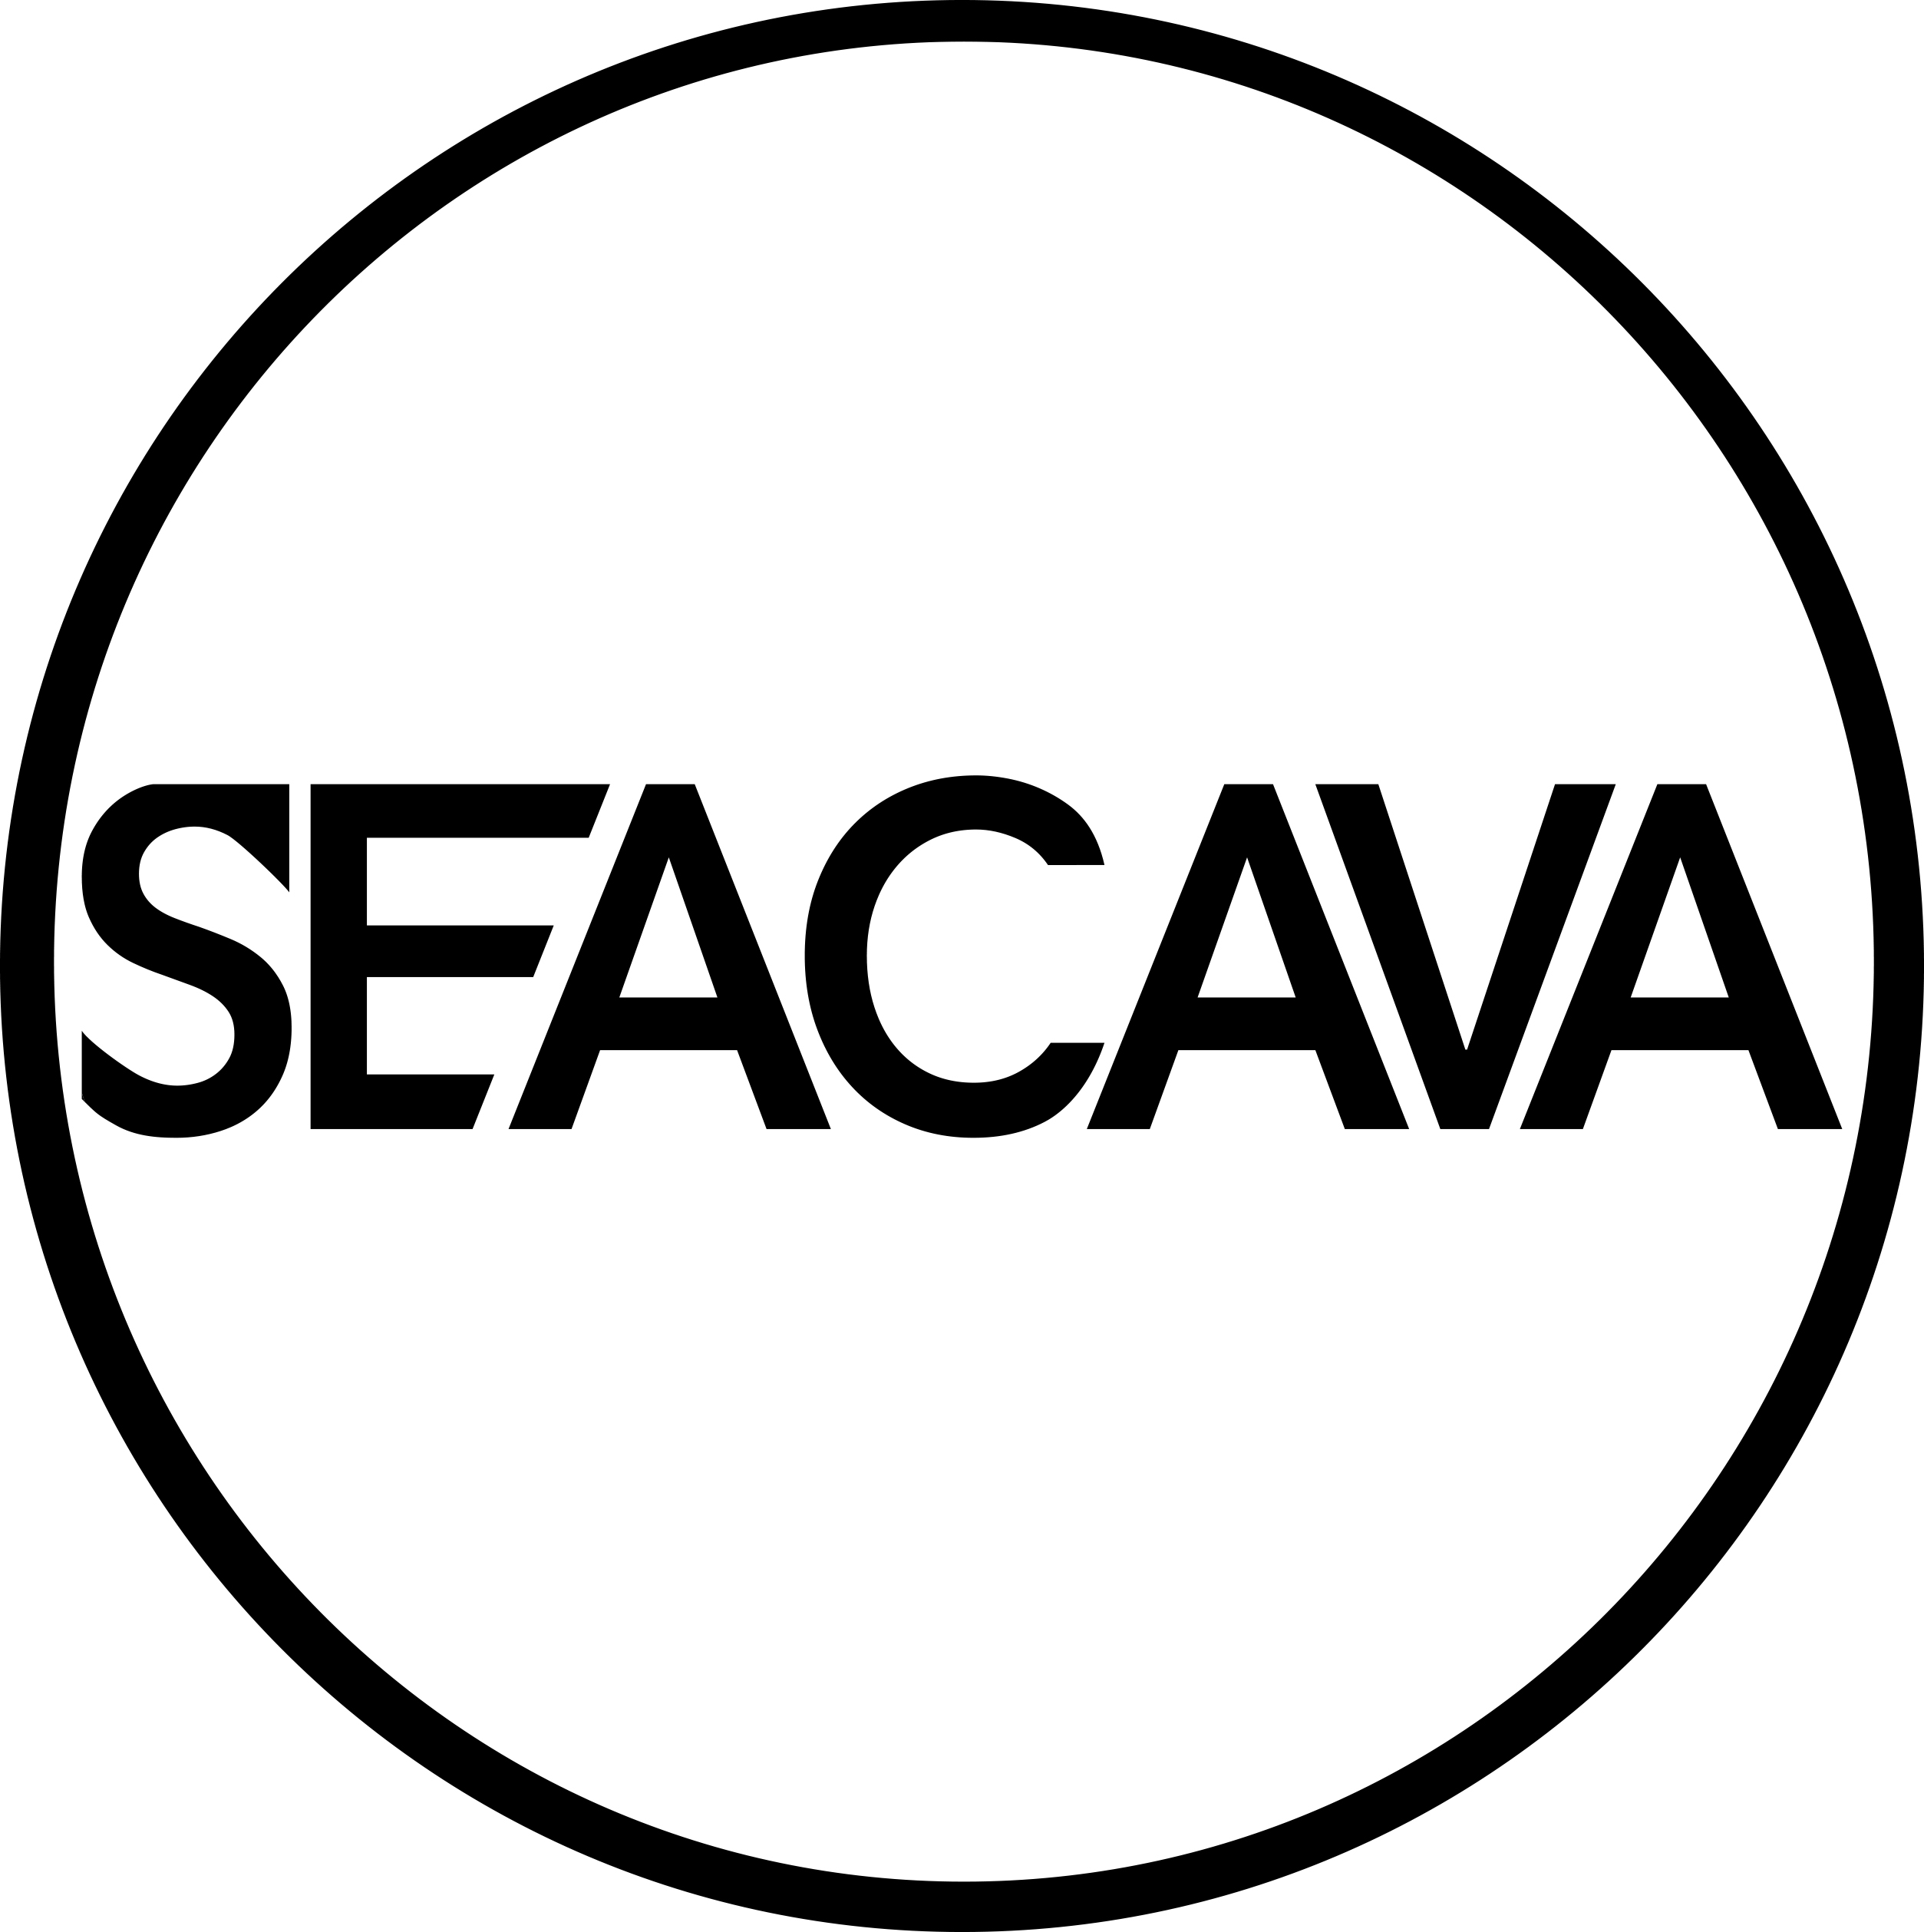 SEACAVA logo